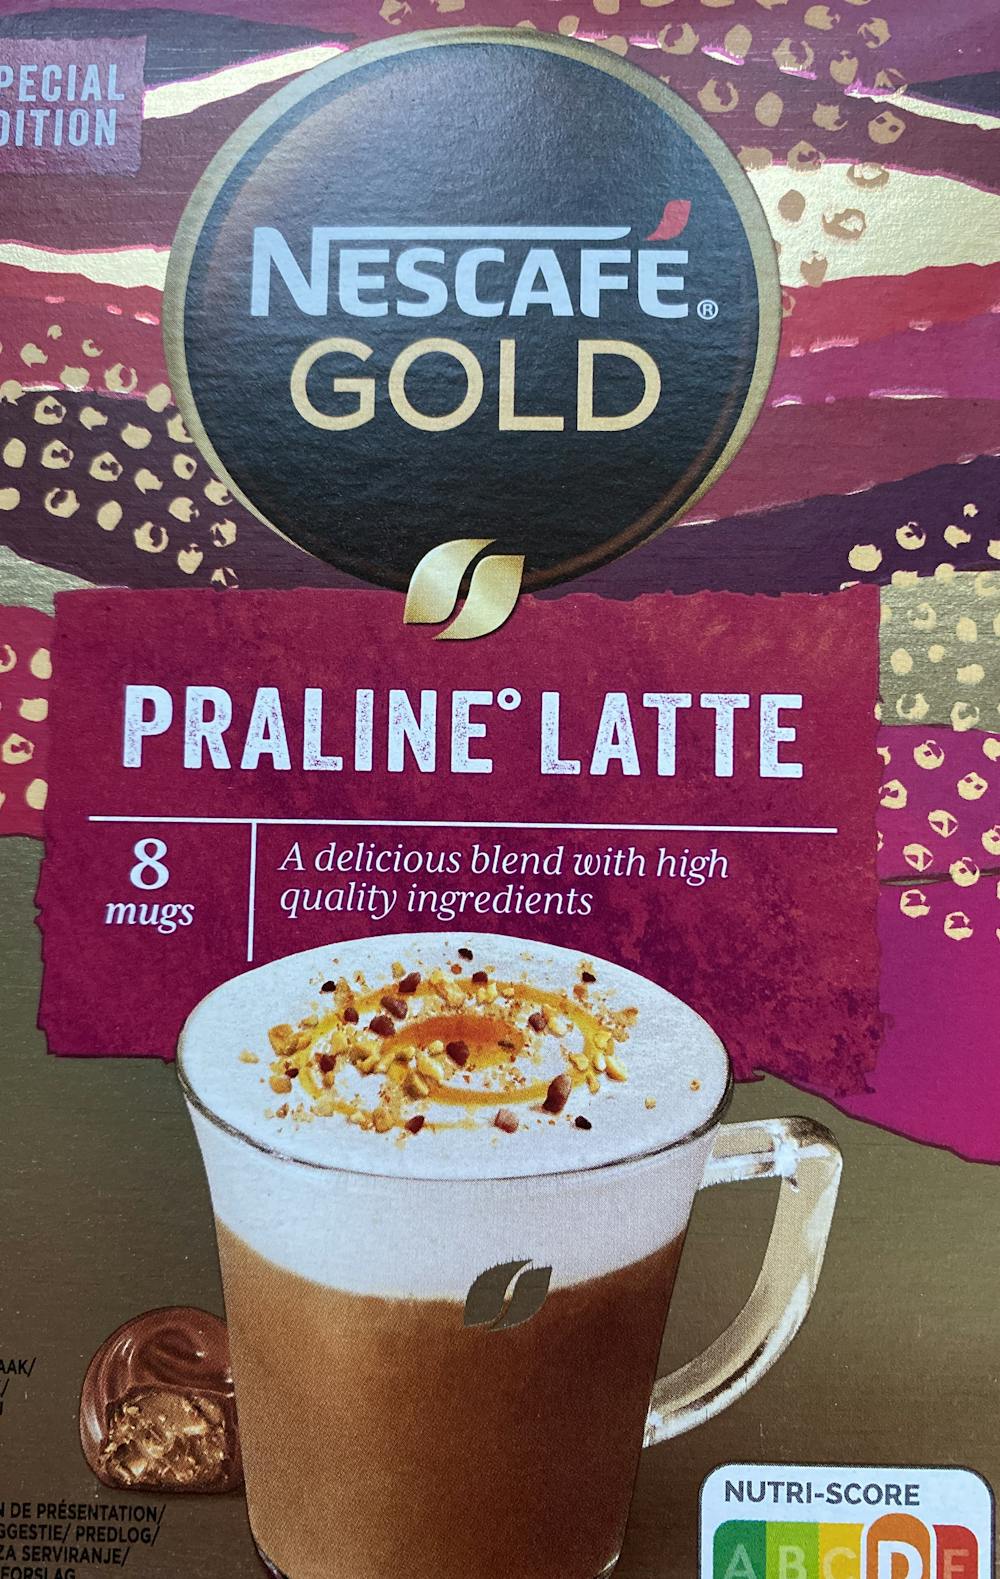 Praline latte, Nescafe gold 